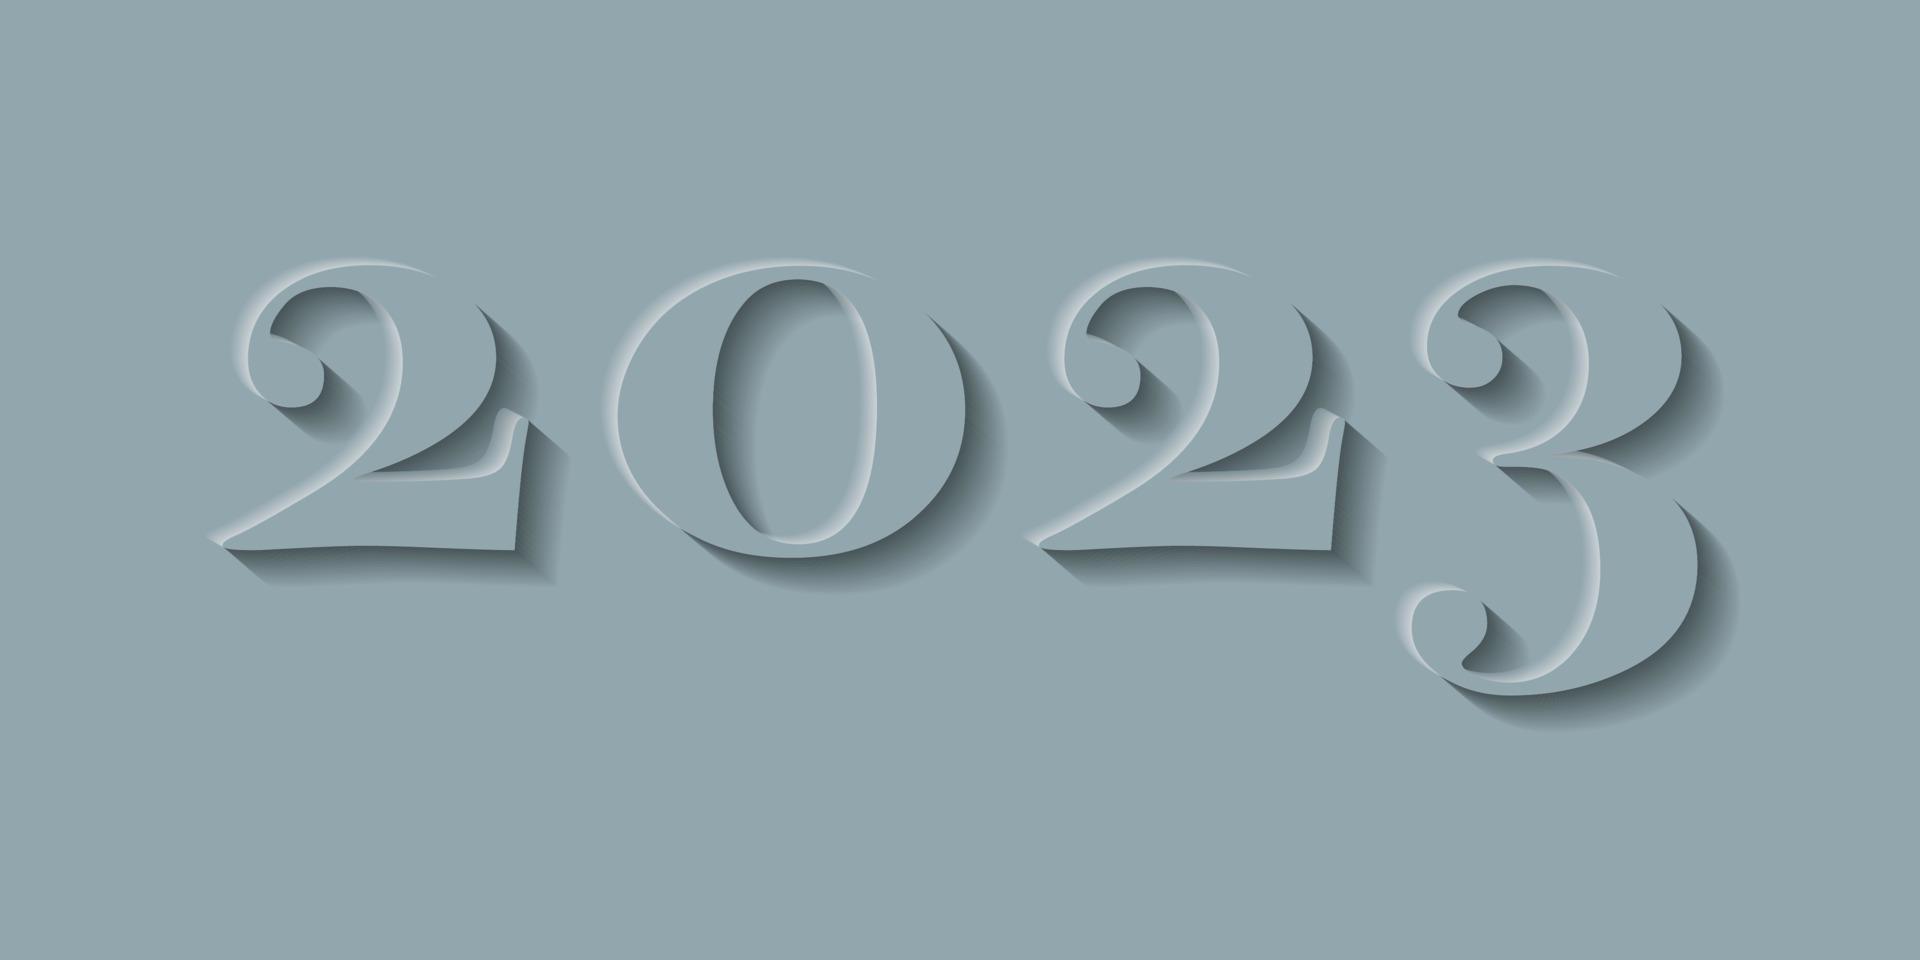 2023 Jahreszahl. 3D-Effekt-Ziffern. Papierschnitt-Stil. Vektor-Illustration. vektor